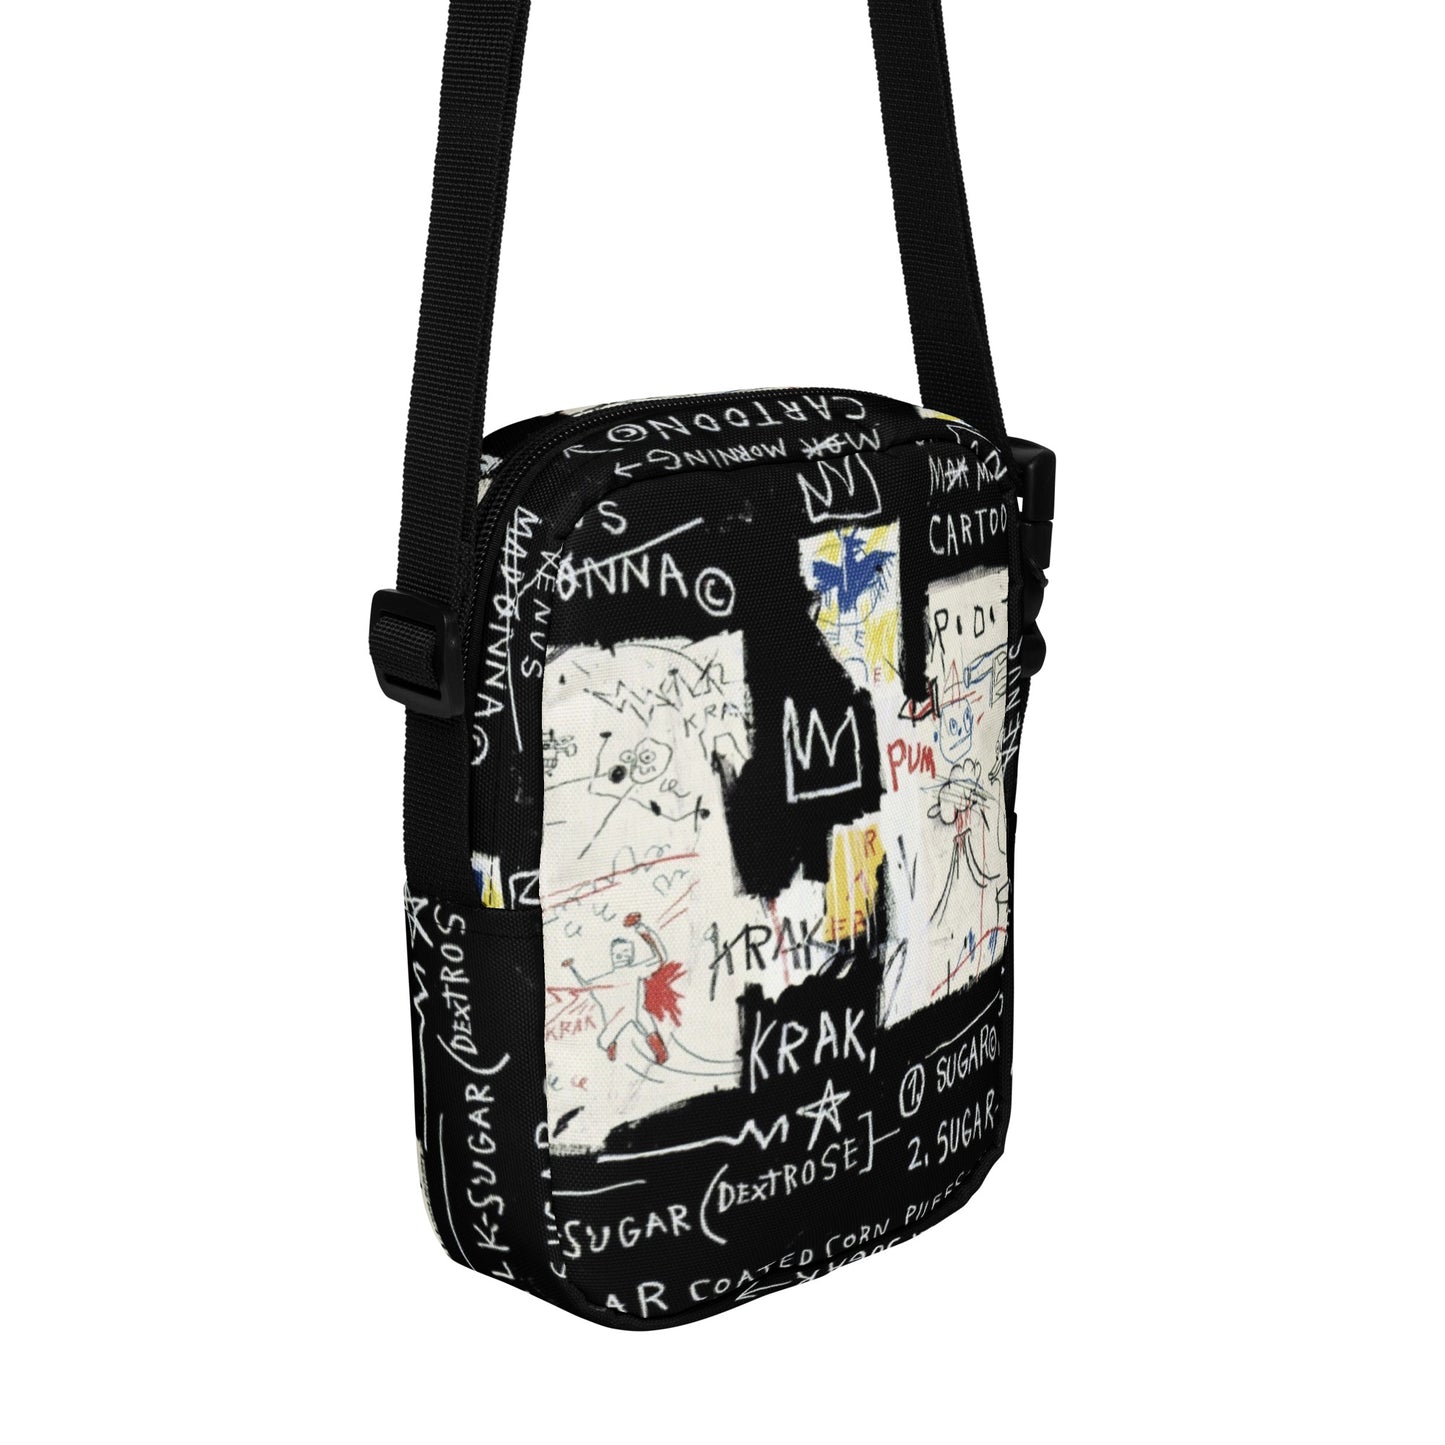 Jean-Michel Basquiat "A Panel of Experts" Artwork Bag